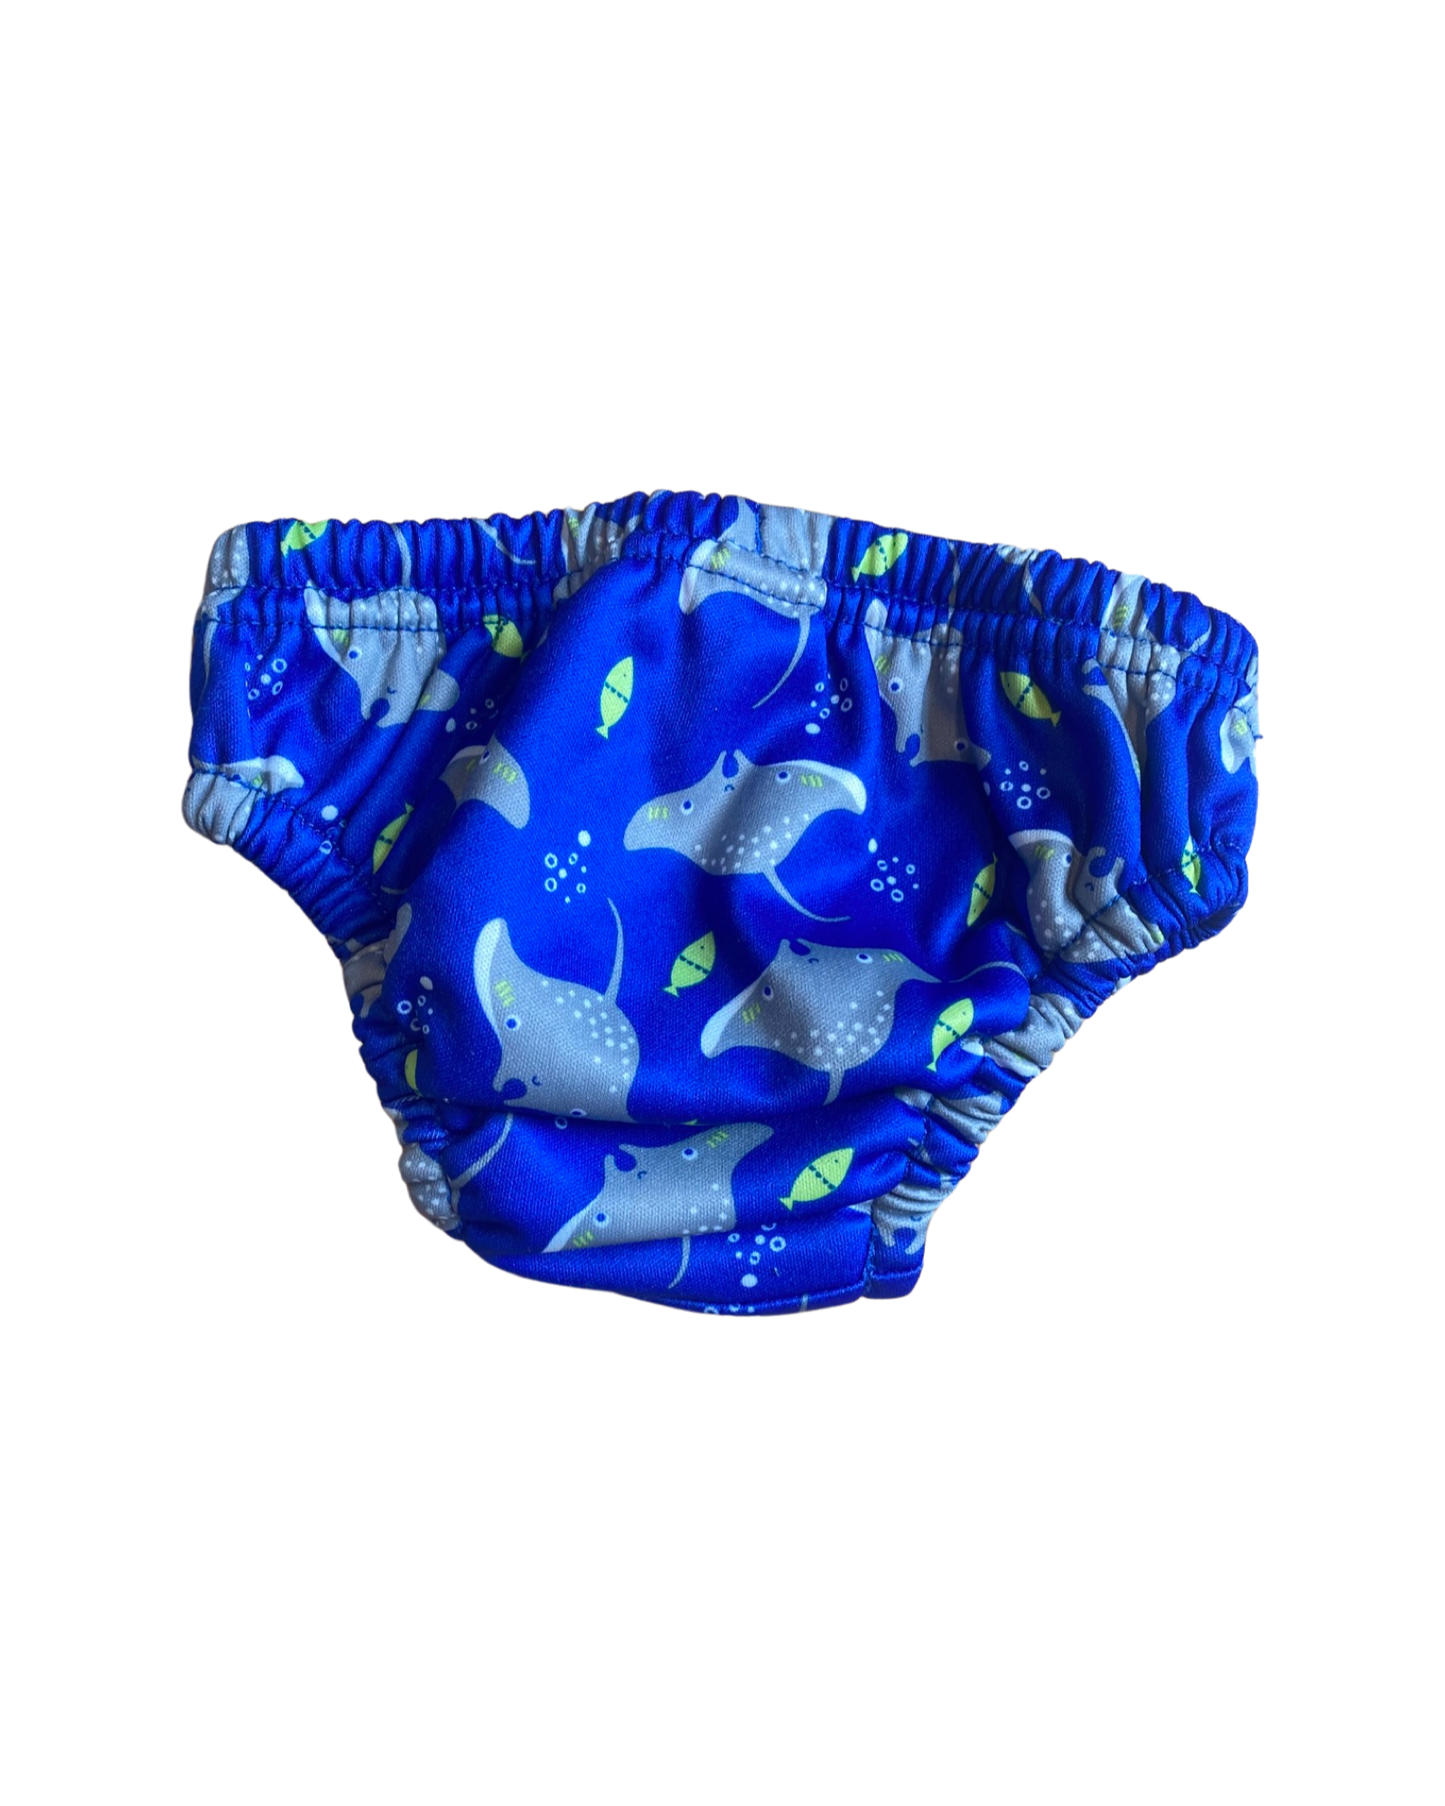 Bambino Mio manta ray print swim nappy (size 0-6mths)